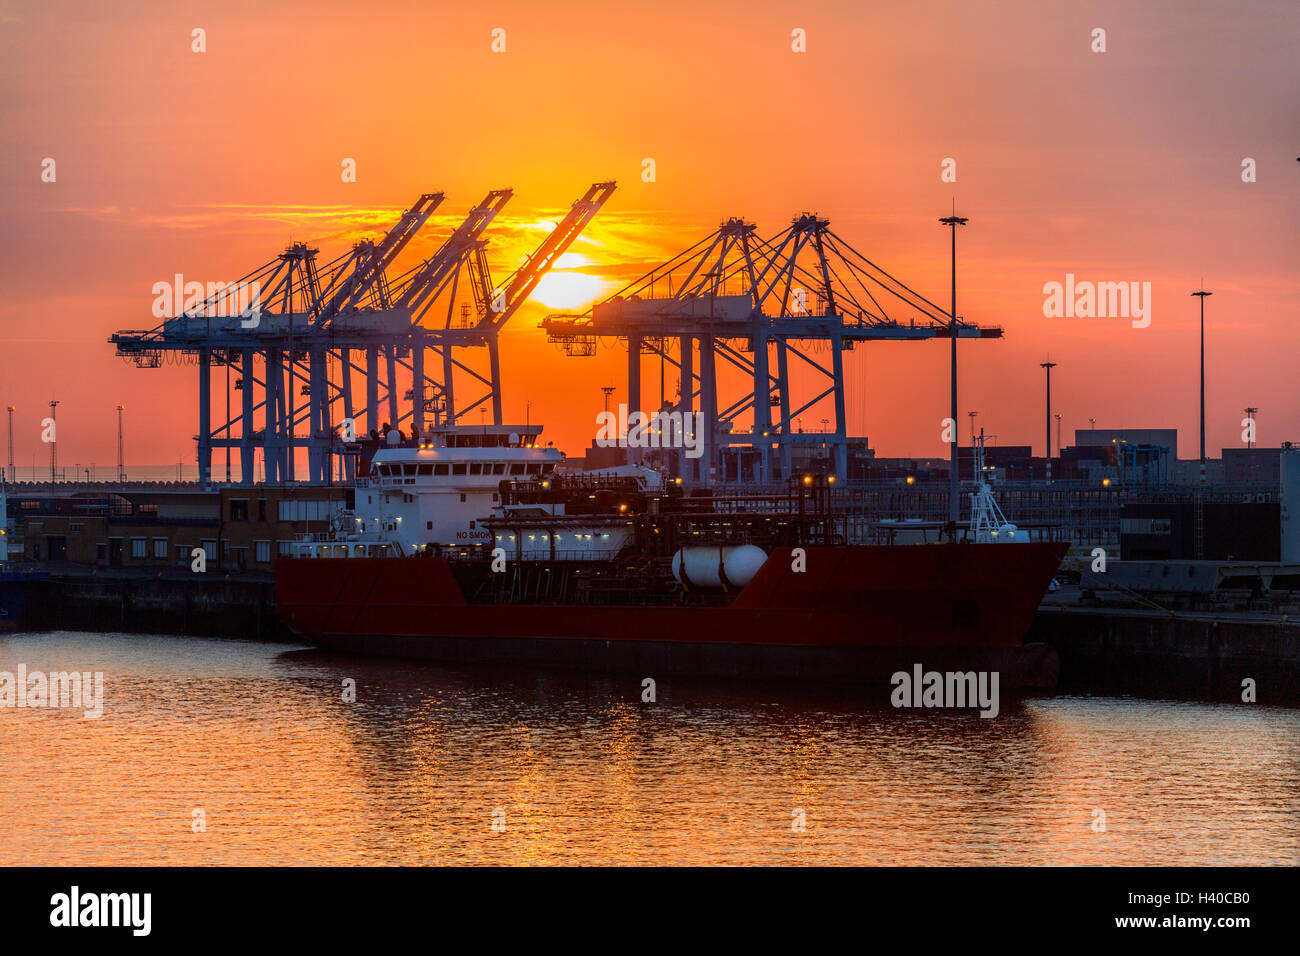 Ship in dock at sunset in the Port of Zeebrugge in Belgium. Stock Photo